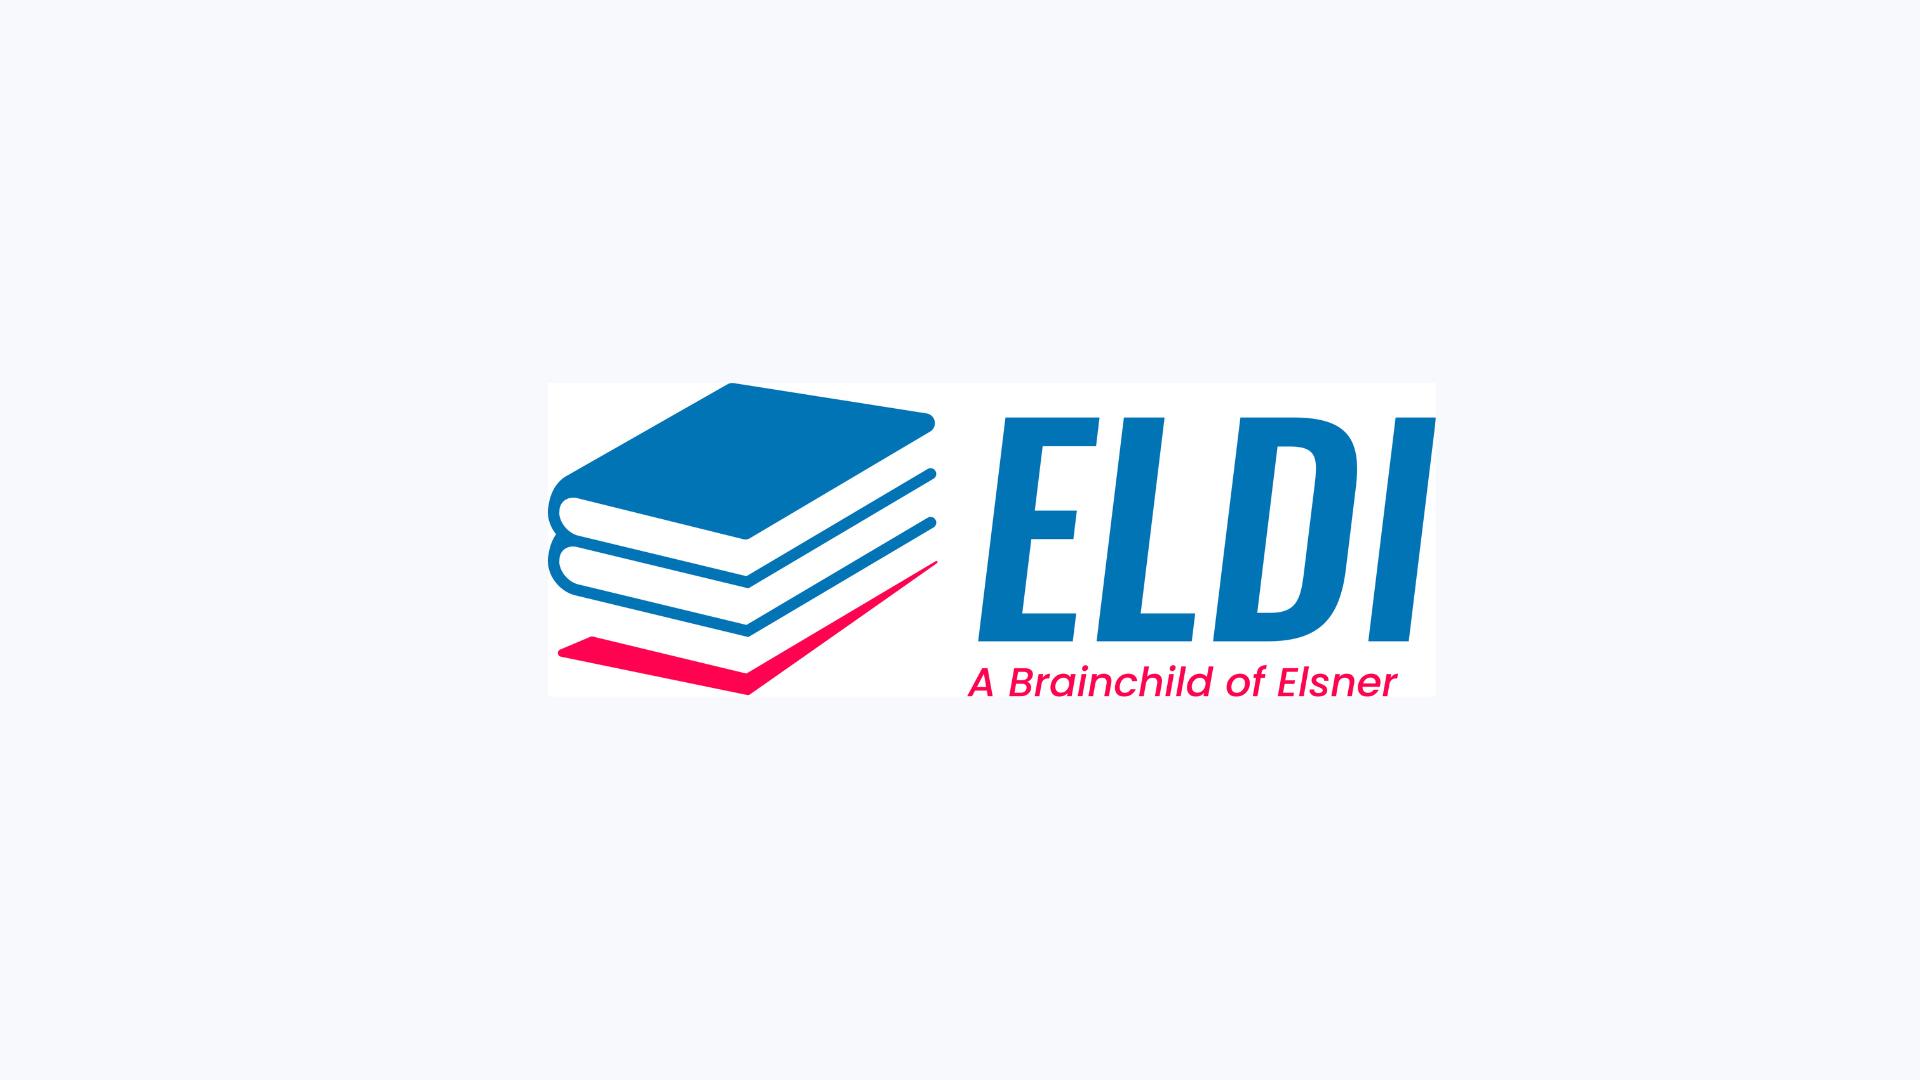 Elsner Learning And Development Institute